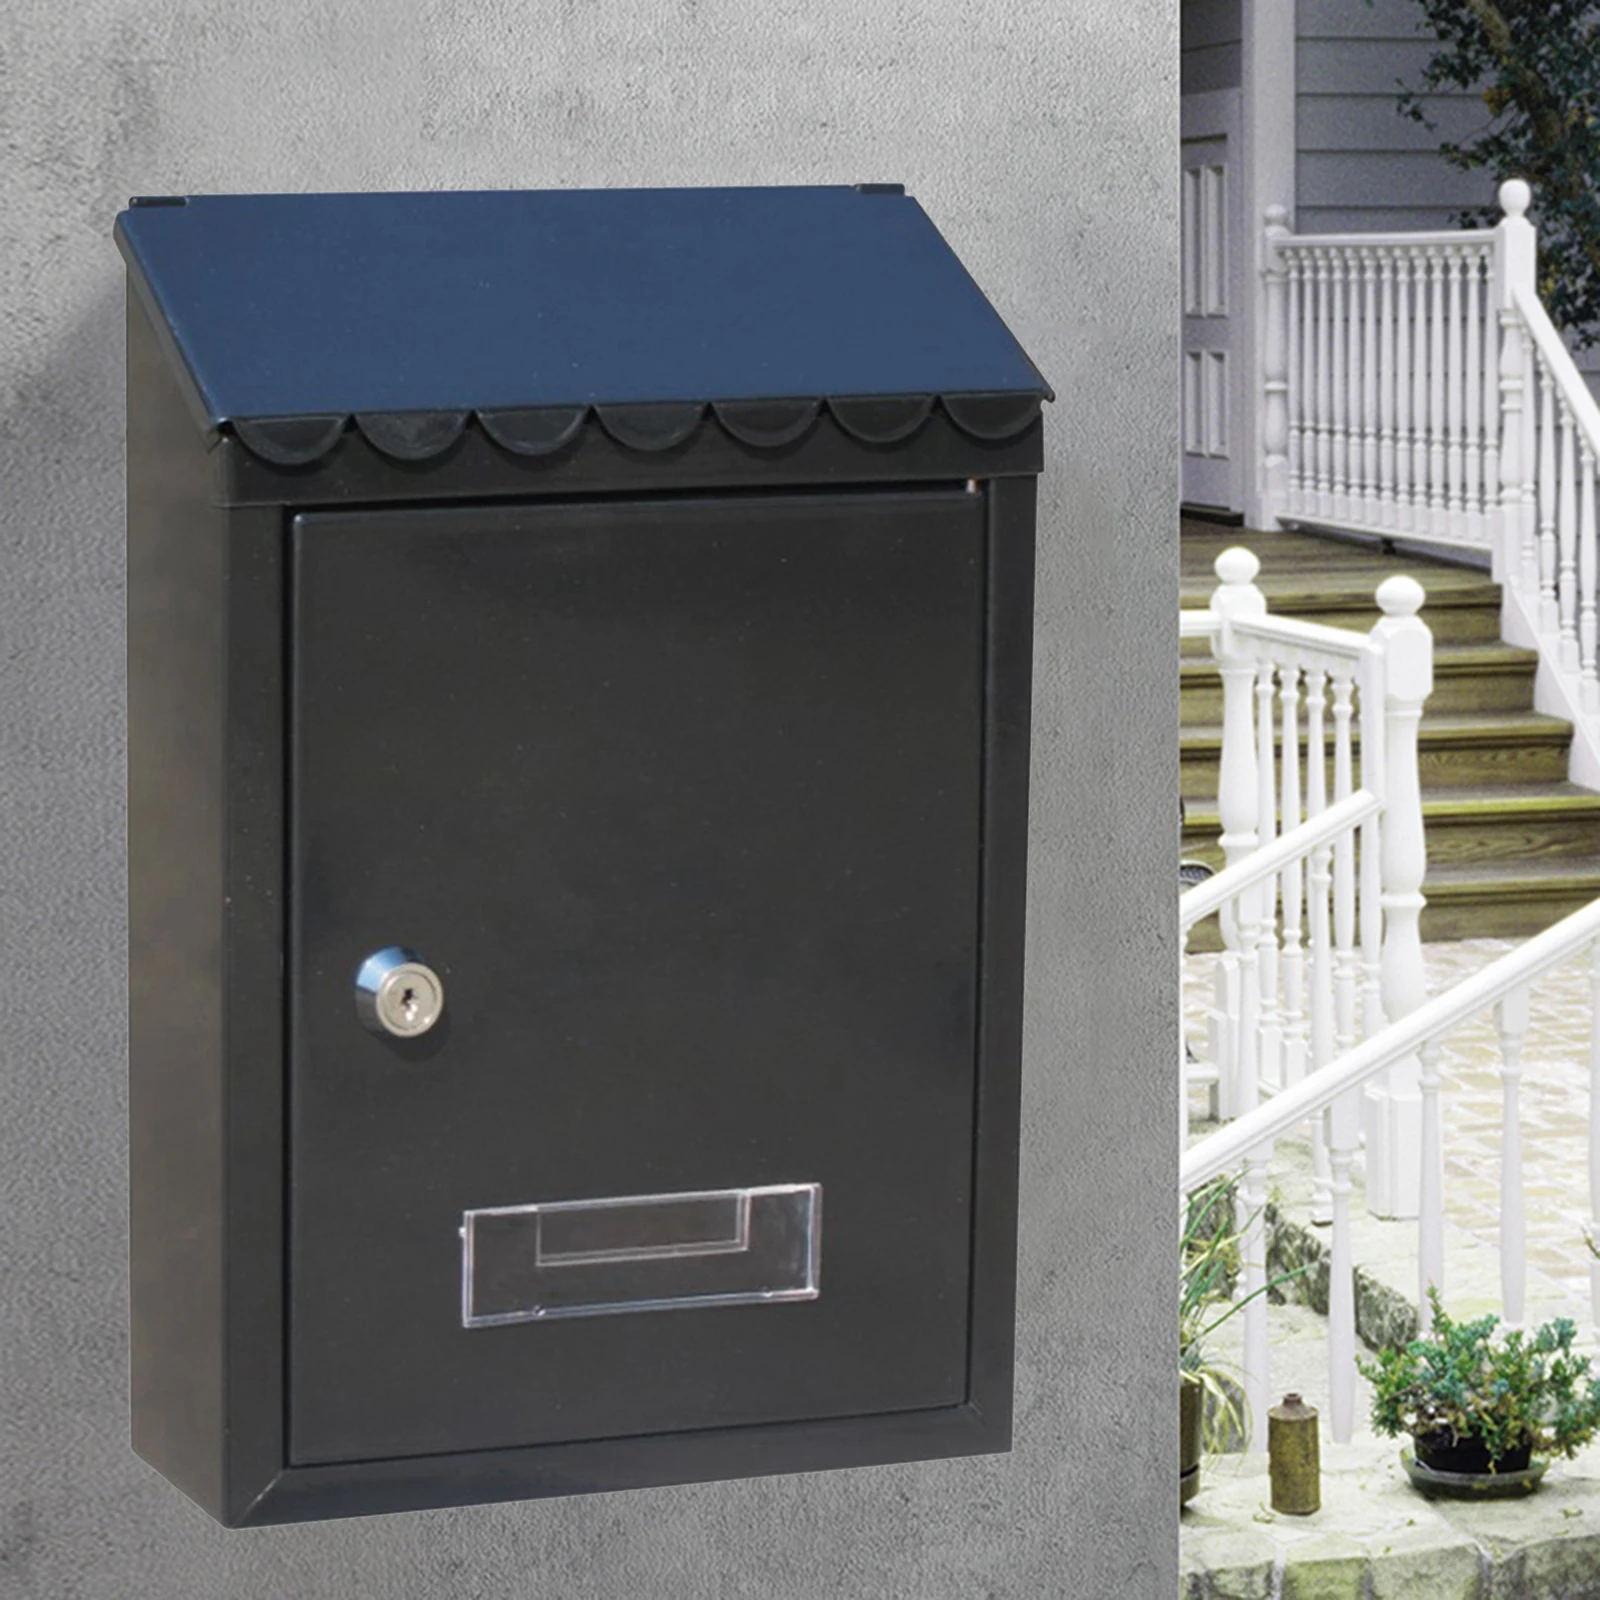 Metal Rustproof Post Box Wall-Mounted Key Locking Premium Mailbox with Top-Loading Letter Slot Drop Box Case